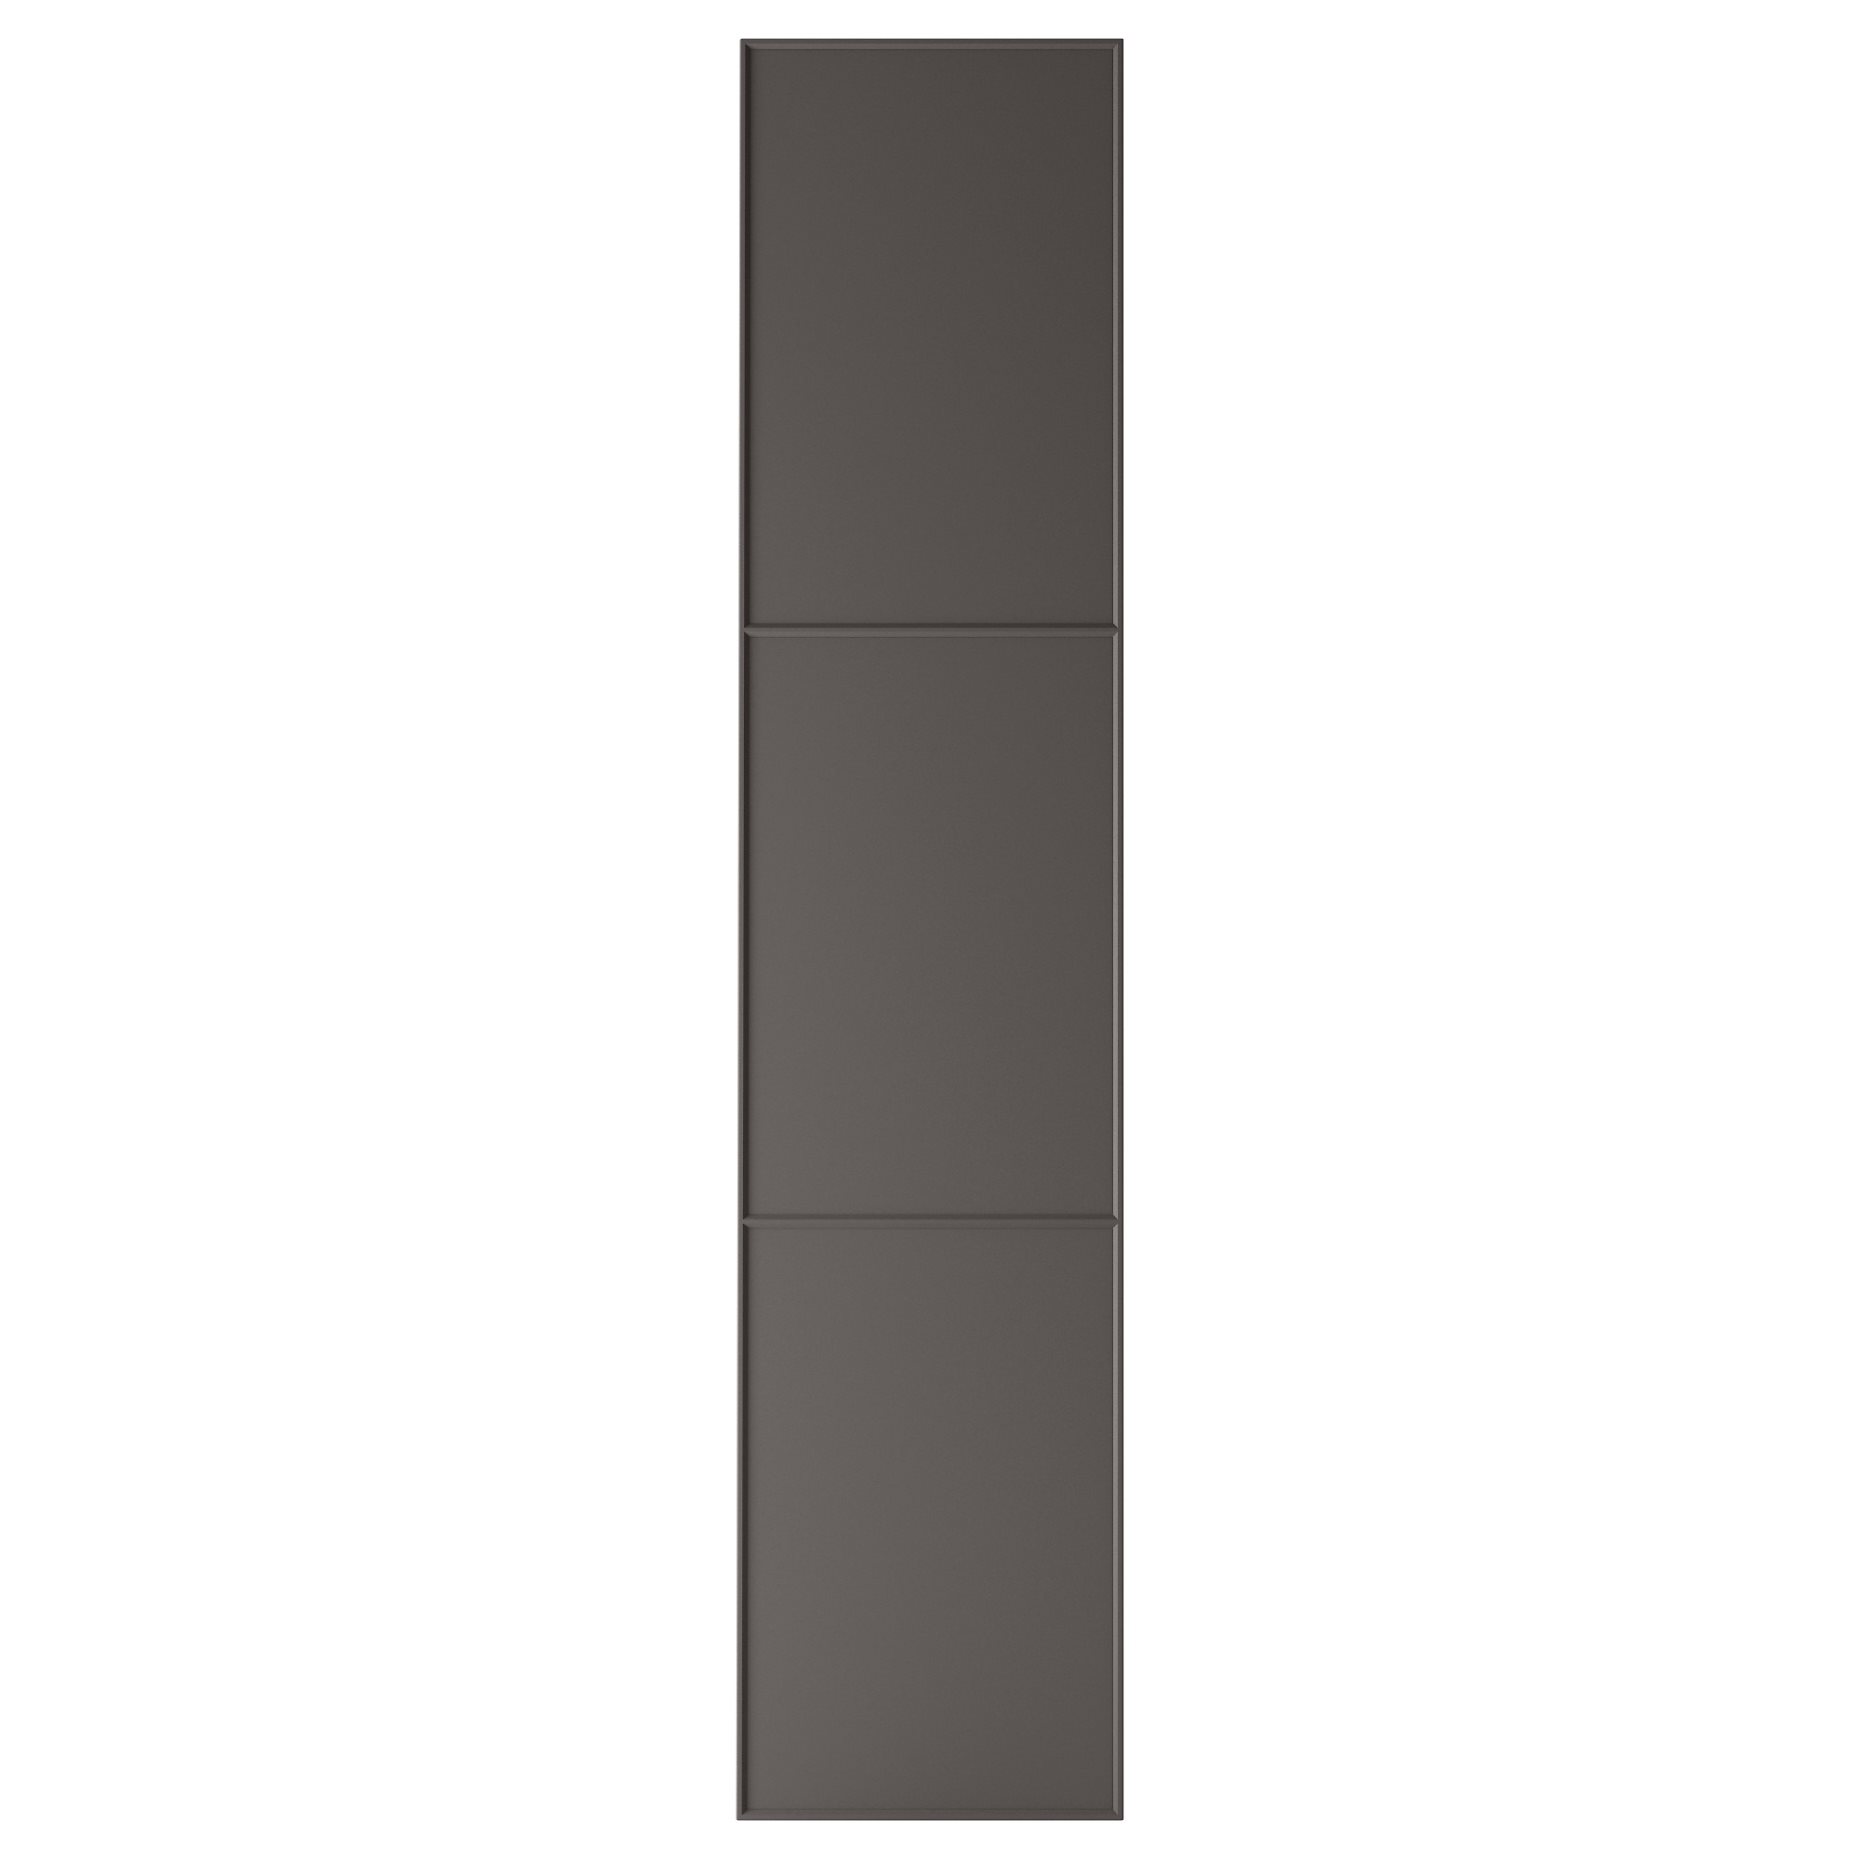 MERÅKER, πόρτα με μεντεσέδες, 50x229 cm, 791.228.24